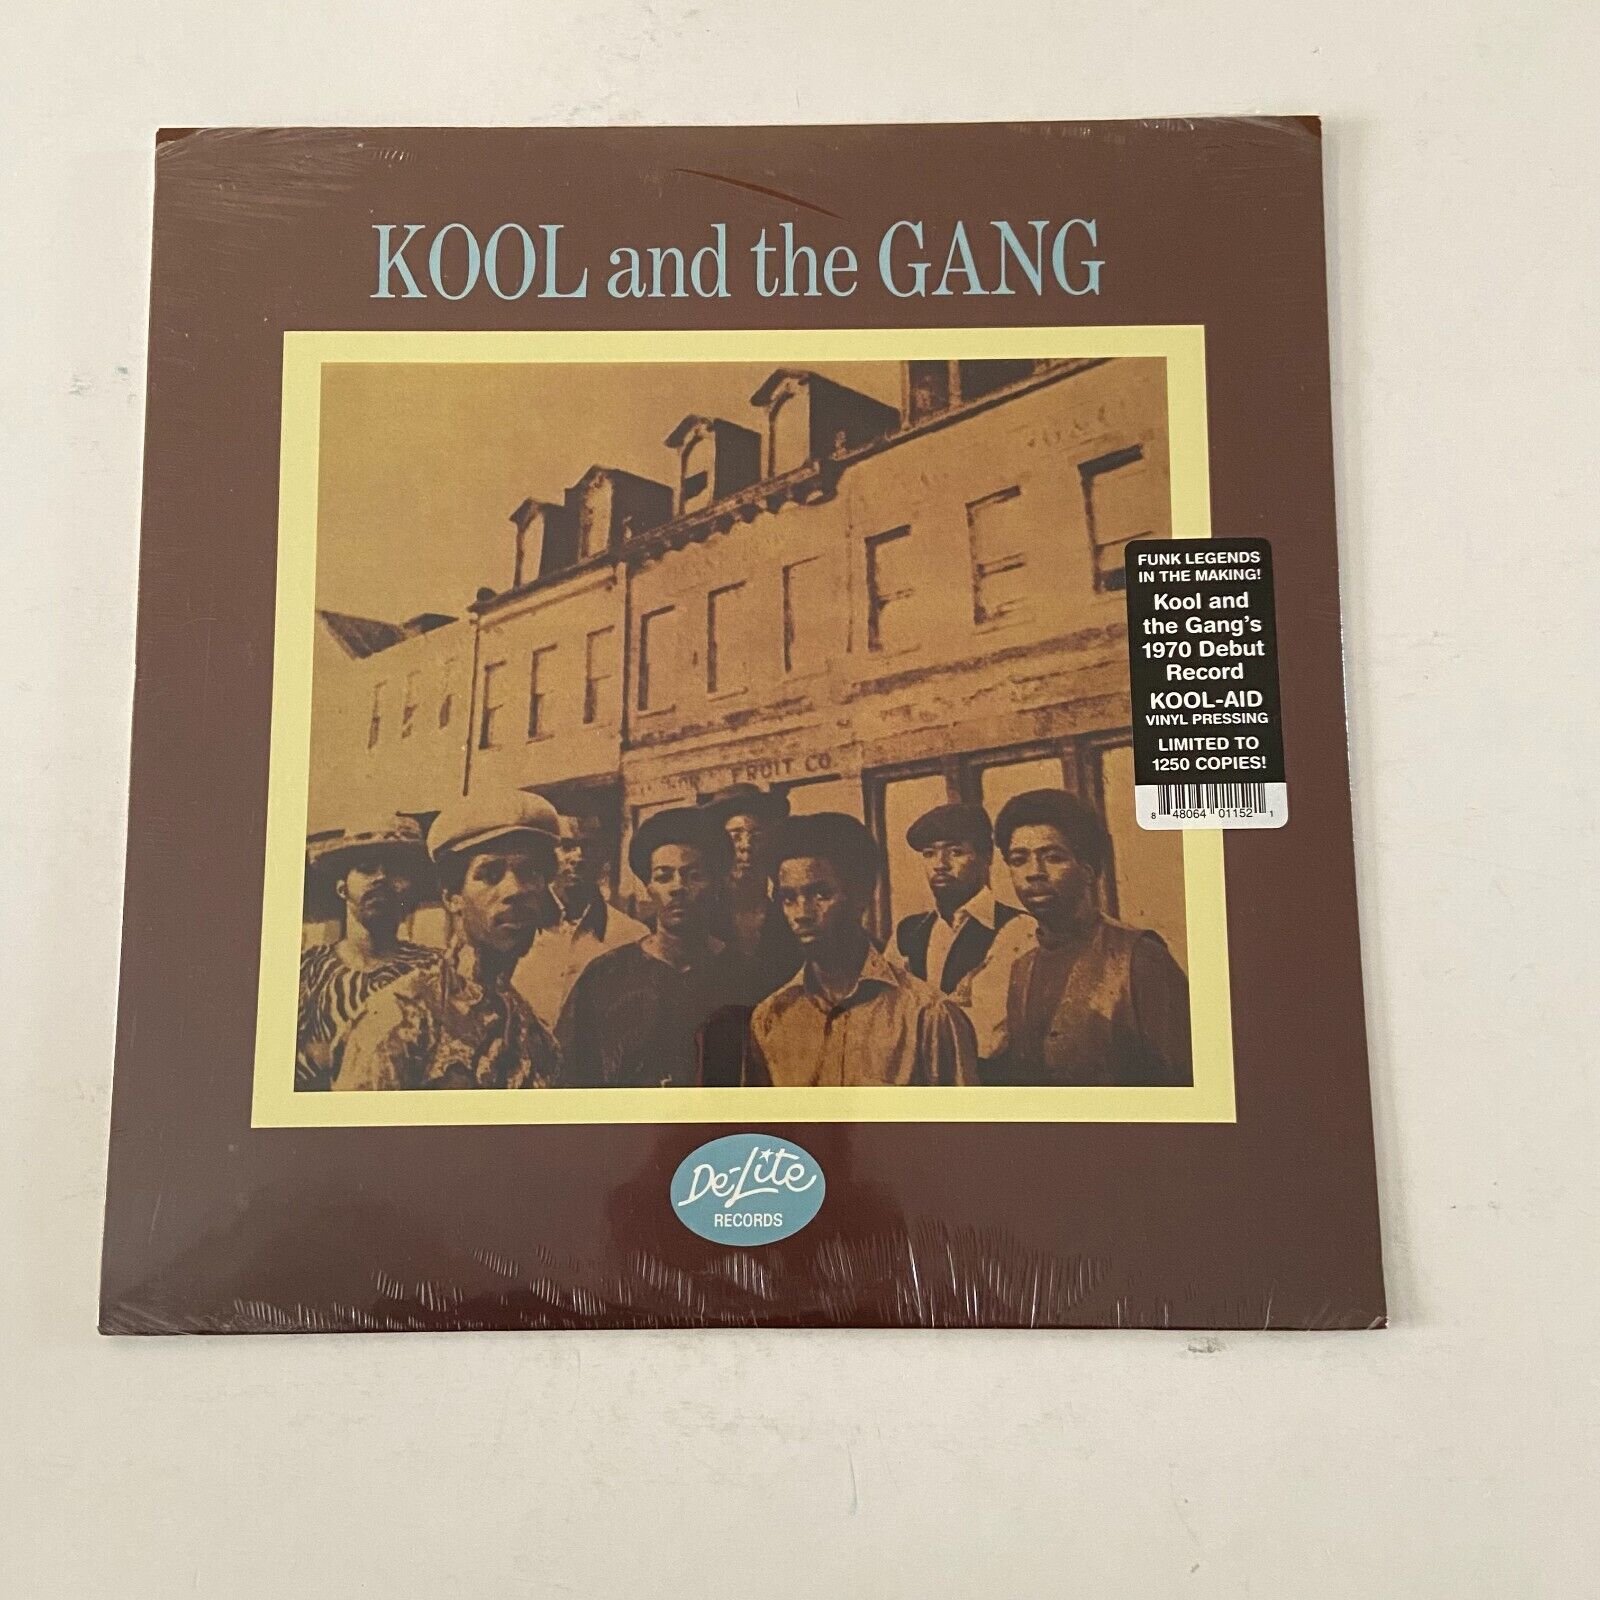 Kool and the Gang 1970 Debut Record Kool-Aid Vinyl LP ex / 1250 Copies Sealed